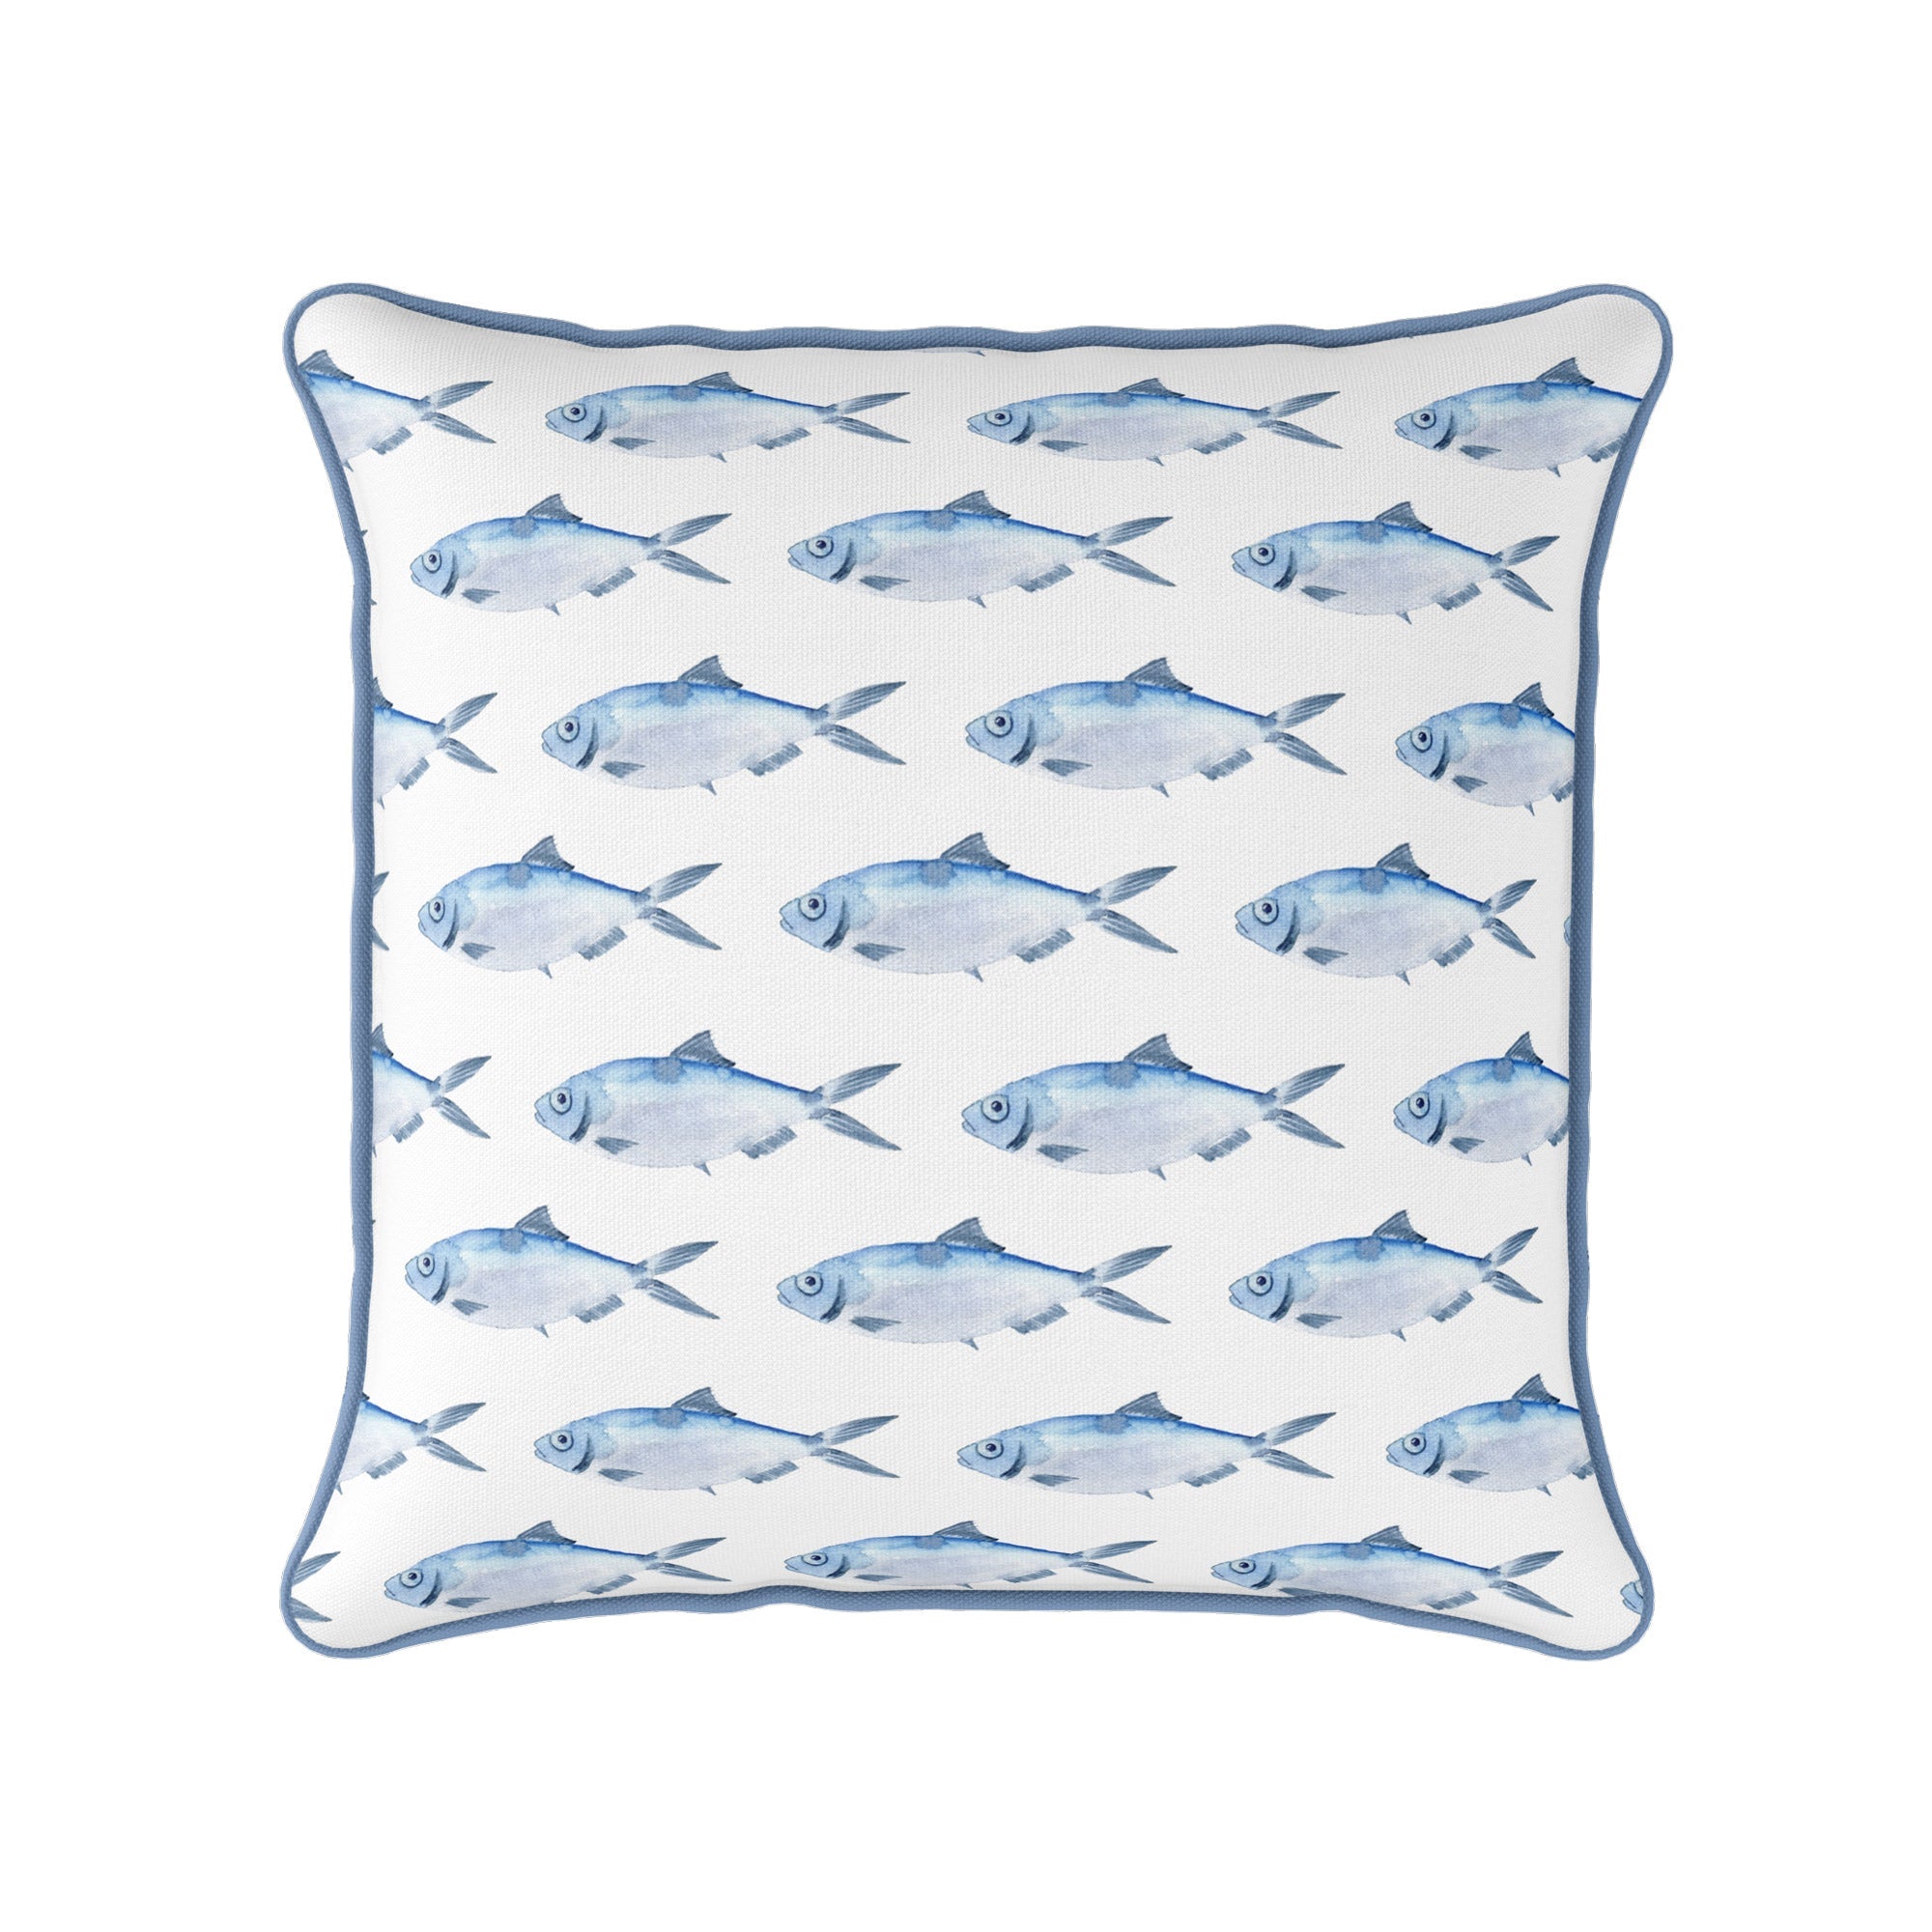 Blue Fish Fabric - Hydrangea Lane Home